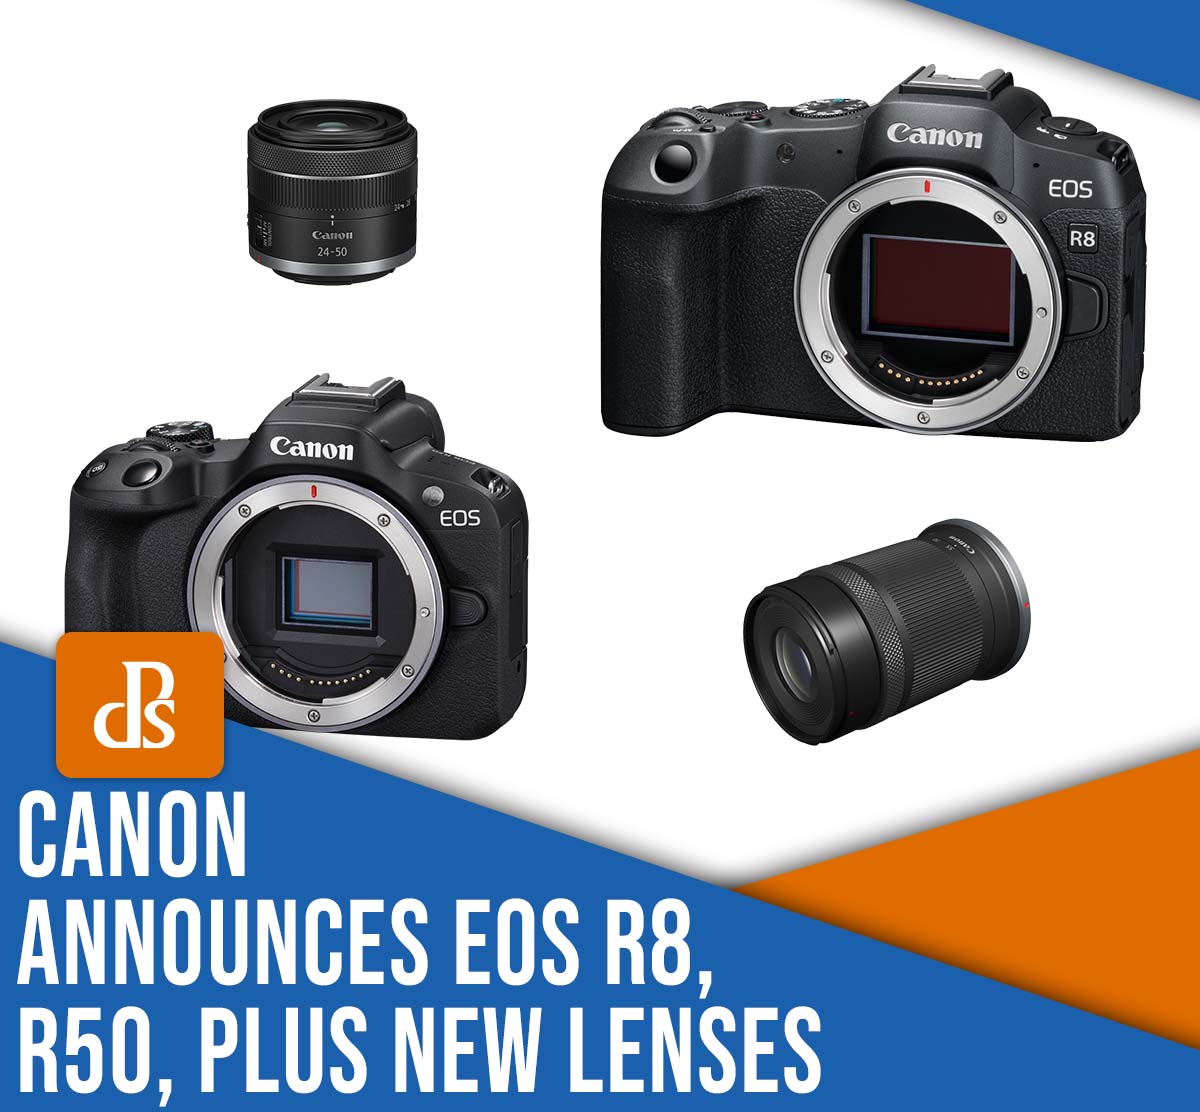 Canon announces the EOS R8, R50, plus new lenses